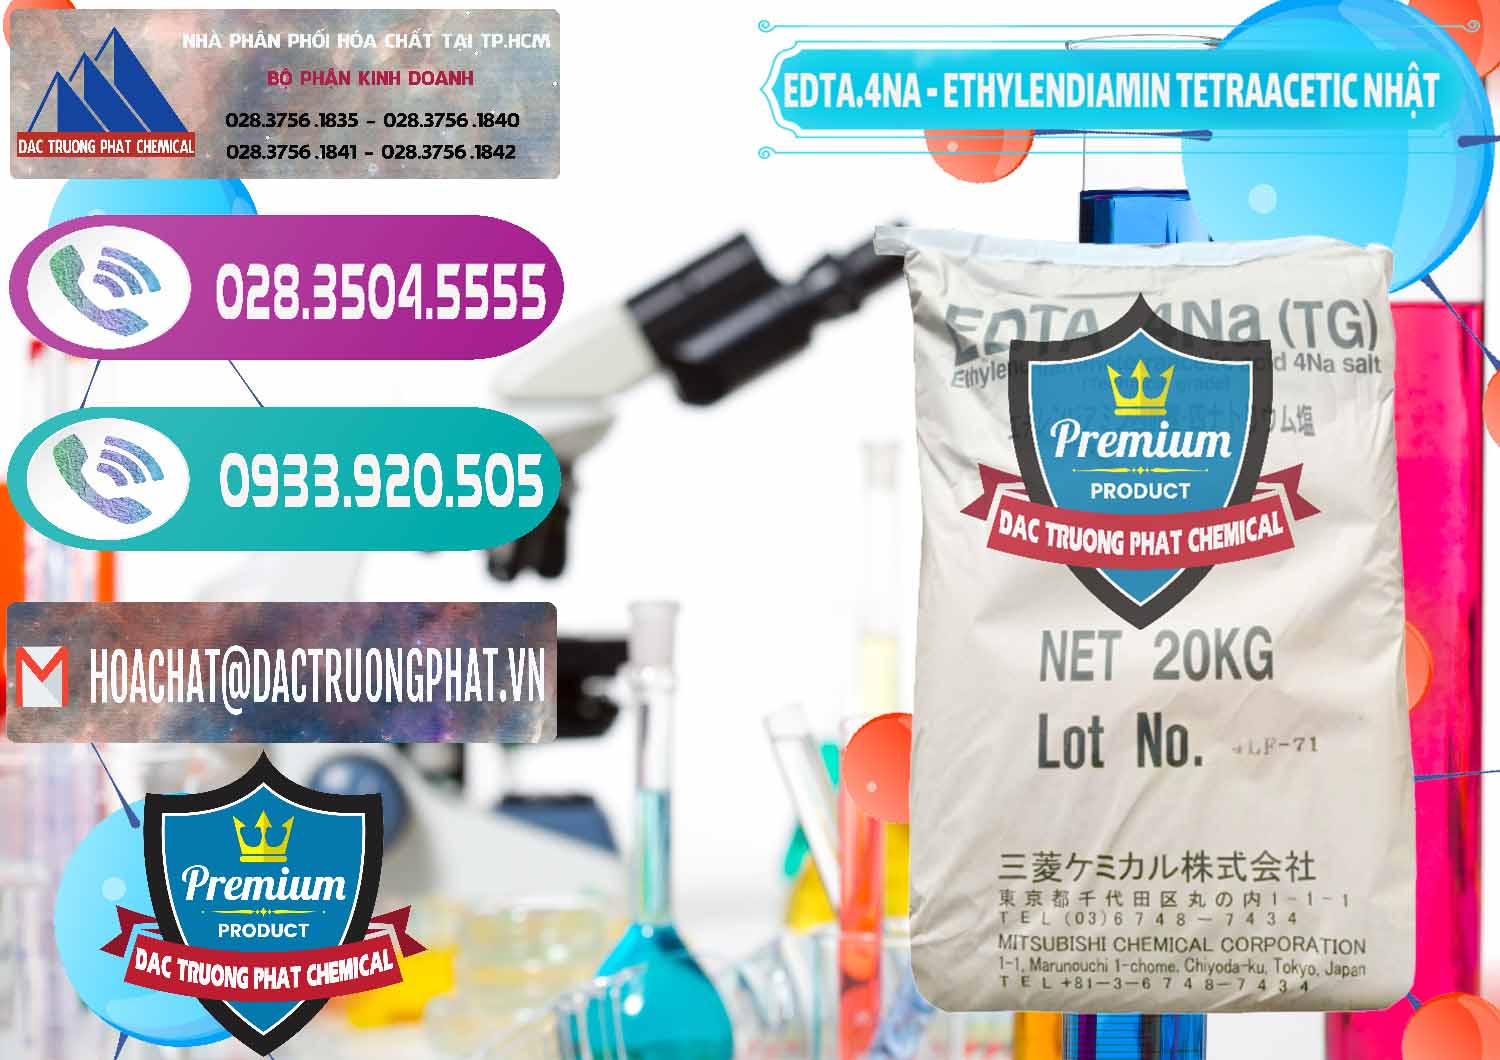 Cung cấp & bán EDTA 4Na - Ethylendiamin Tetraacetic Nhật Bản Japan - 0482 - Cty cung cấp _ kinh doanh hóa chất tại TP.HCM - hoachatxulynuoc.com